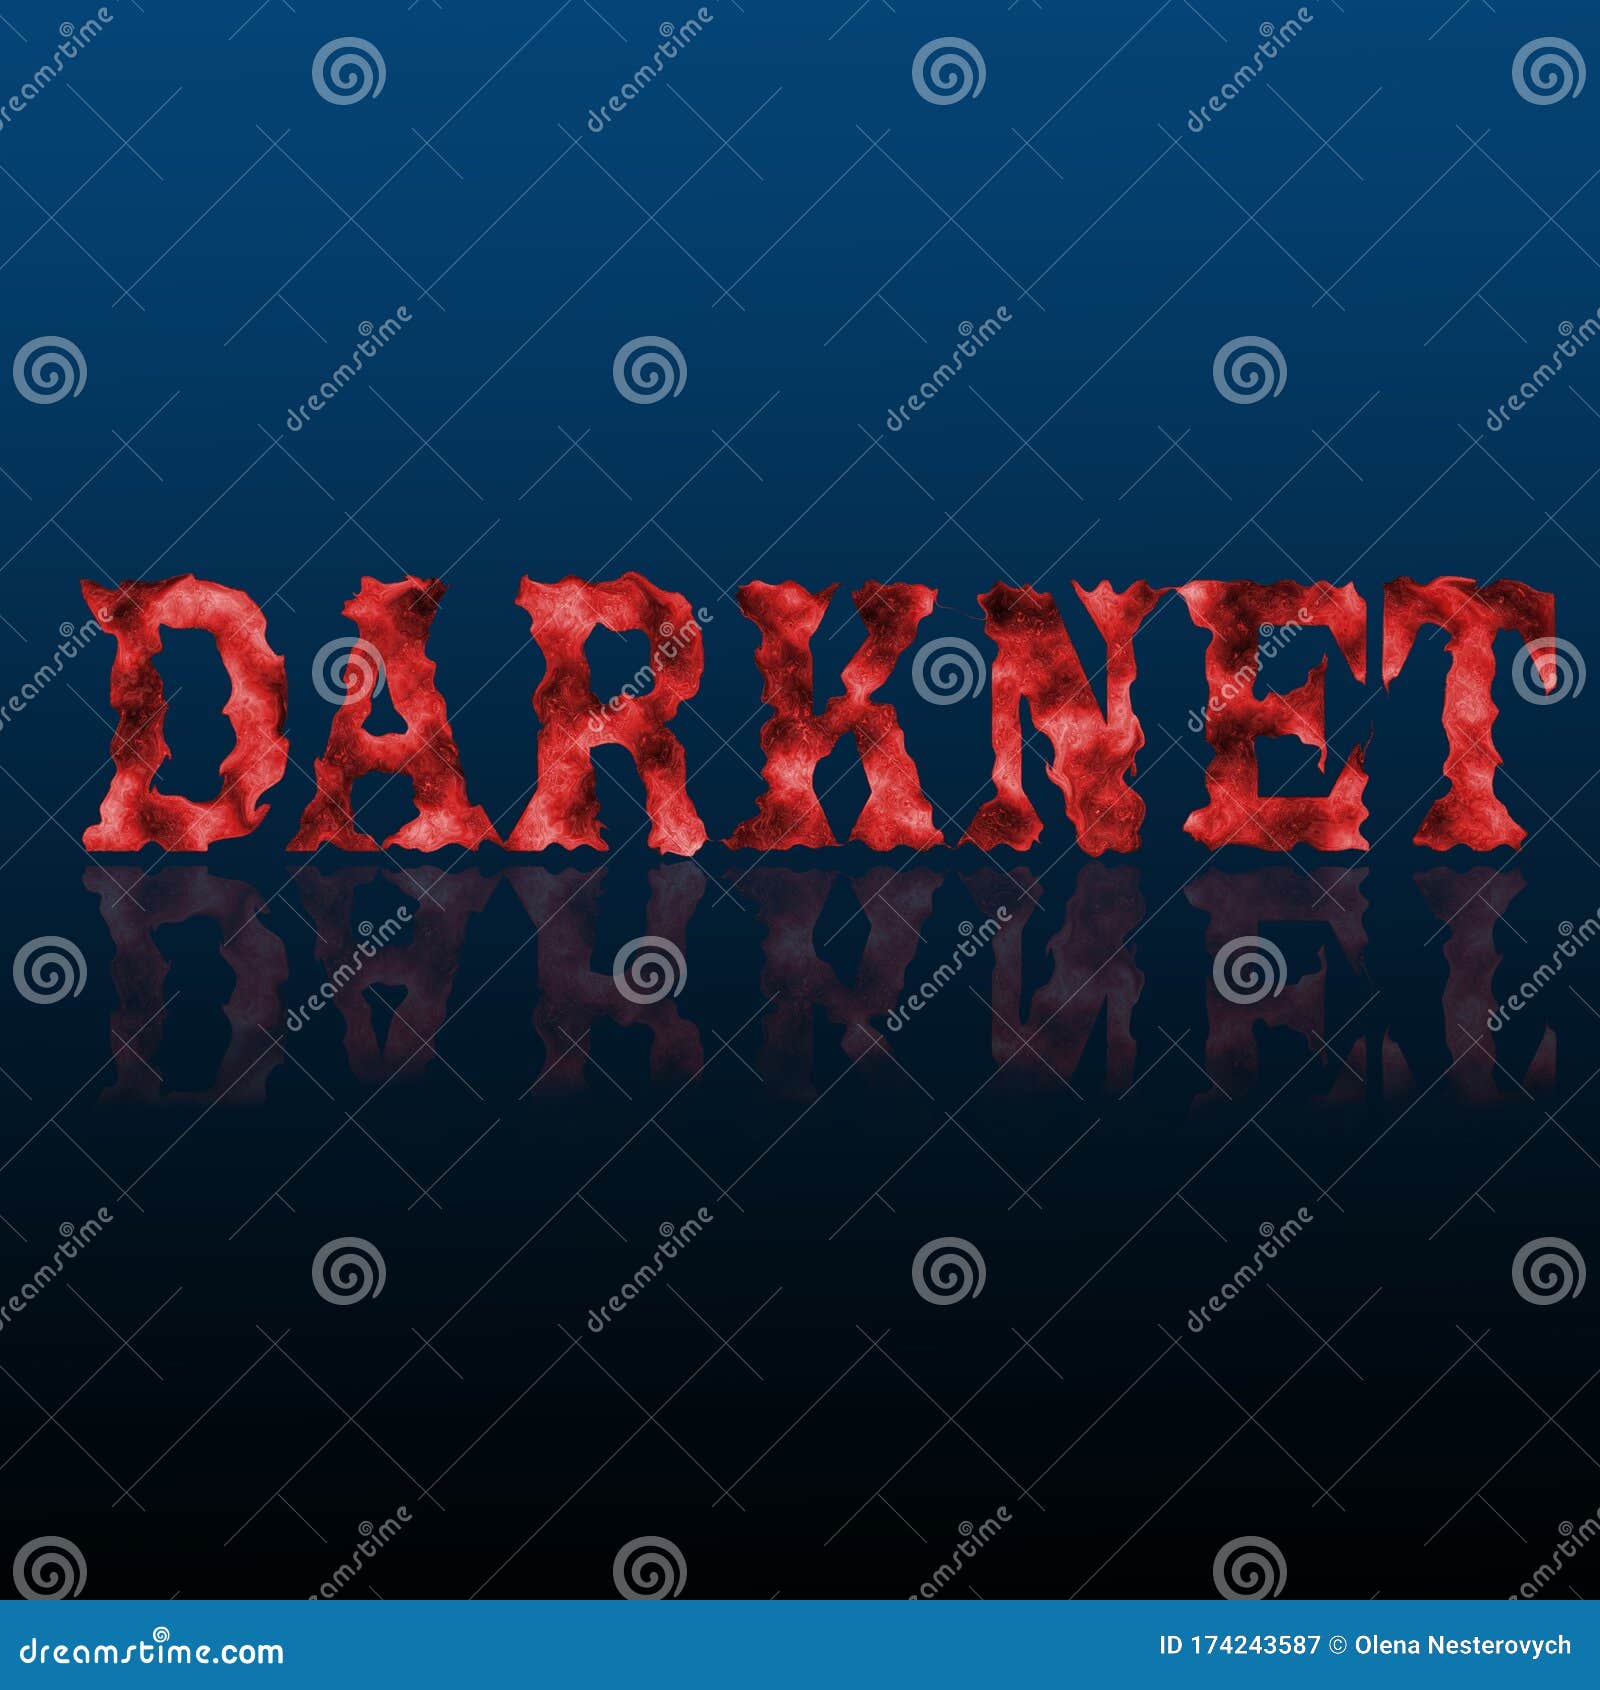 Darknet market security